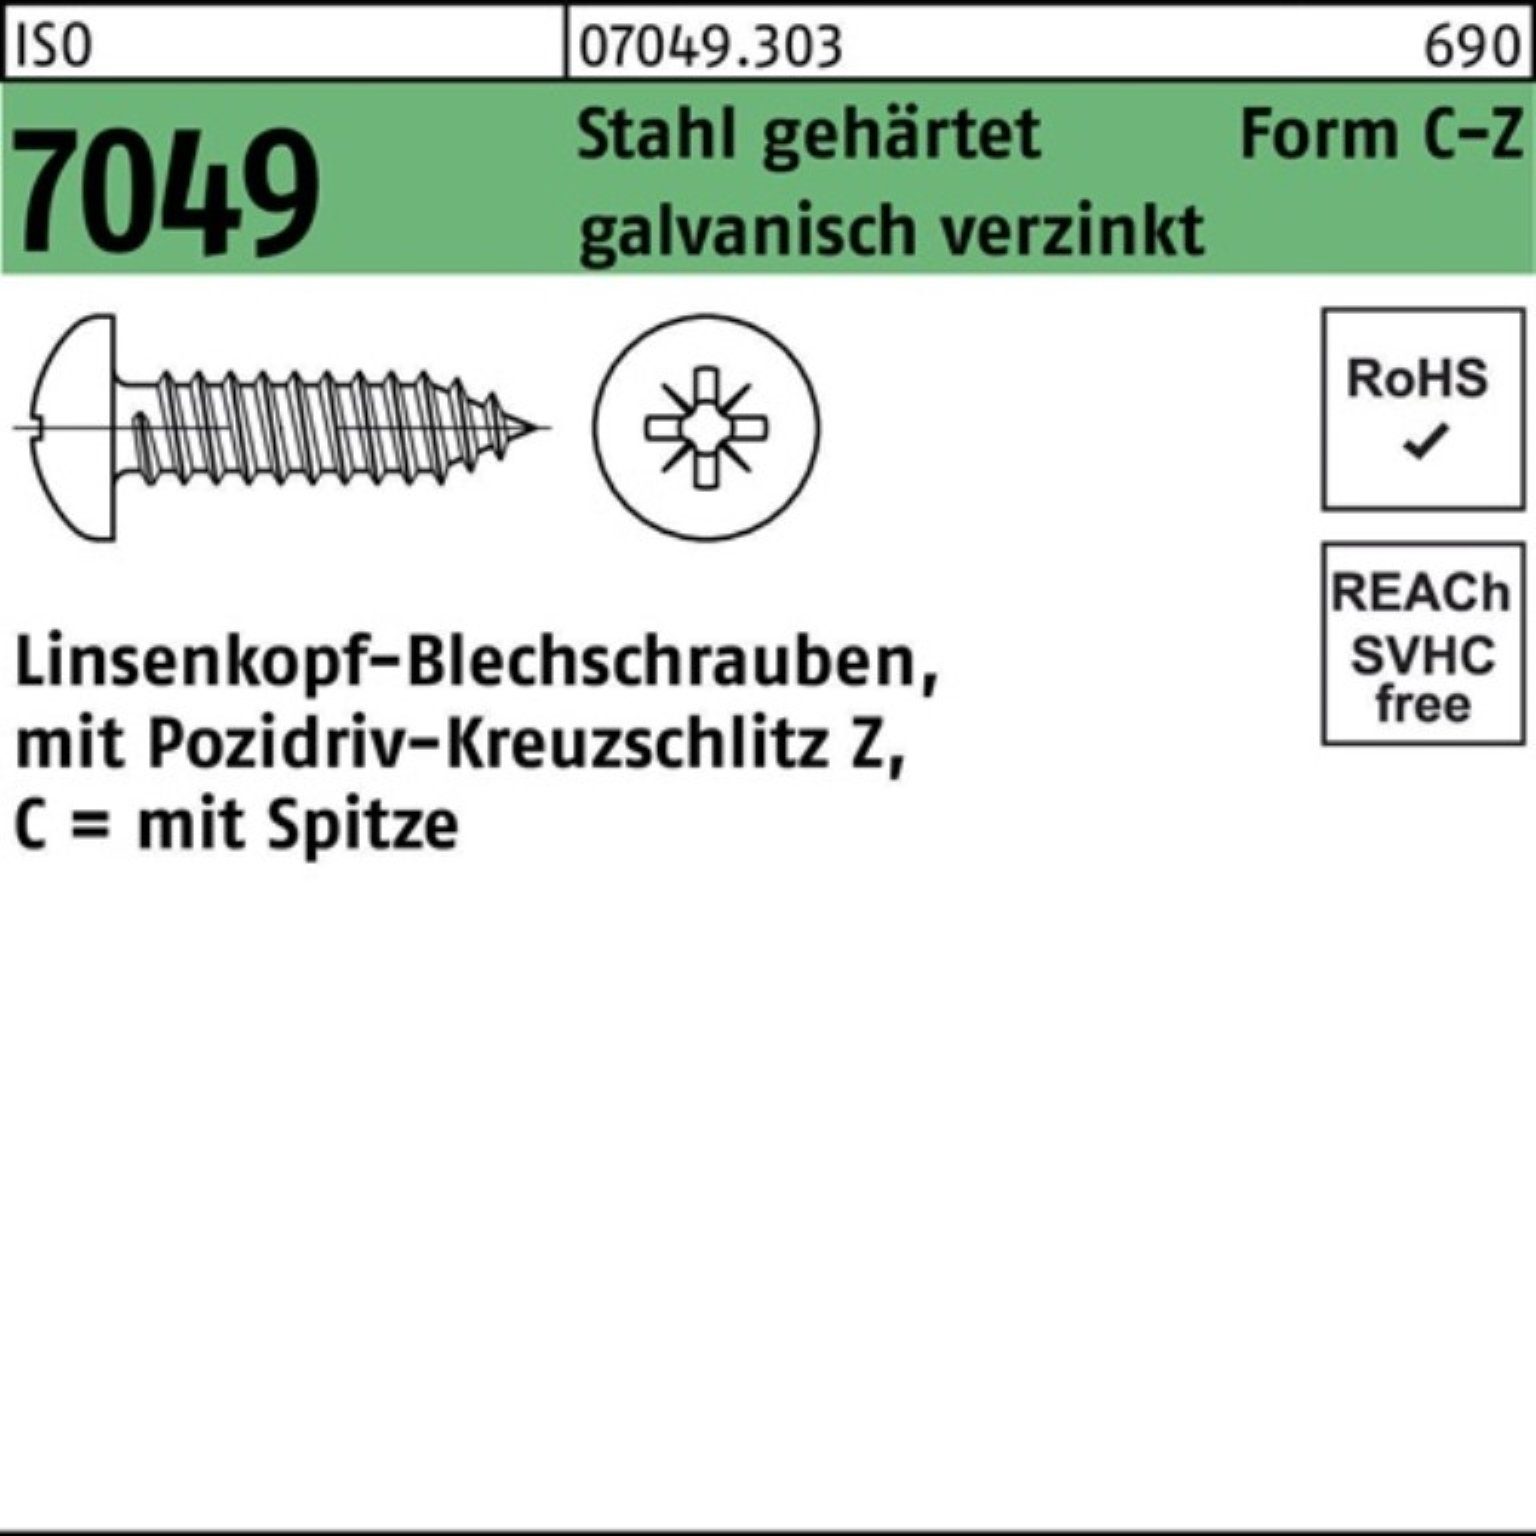 Pack 7049 ge 3,9x 32 500er Stahl Blechschraube Blechschraube Spitze/PZ -C-Z LIKO ISO Reyher